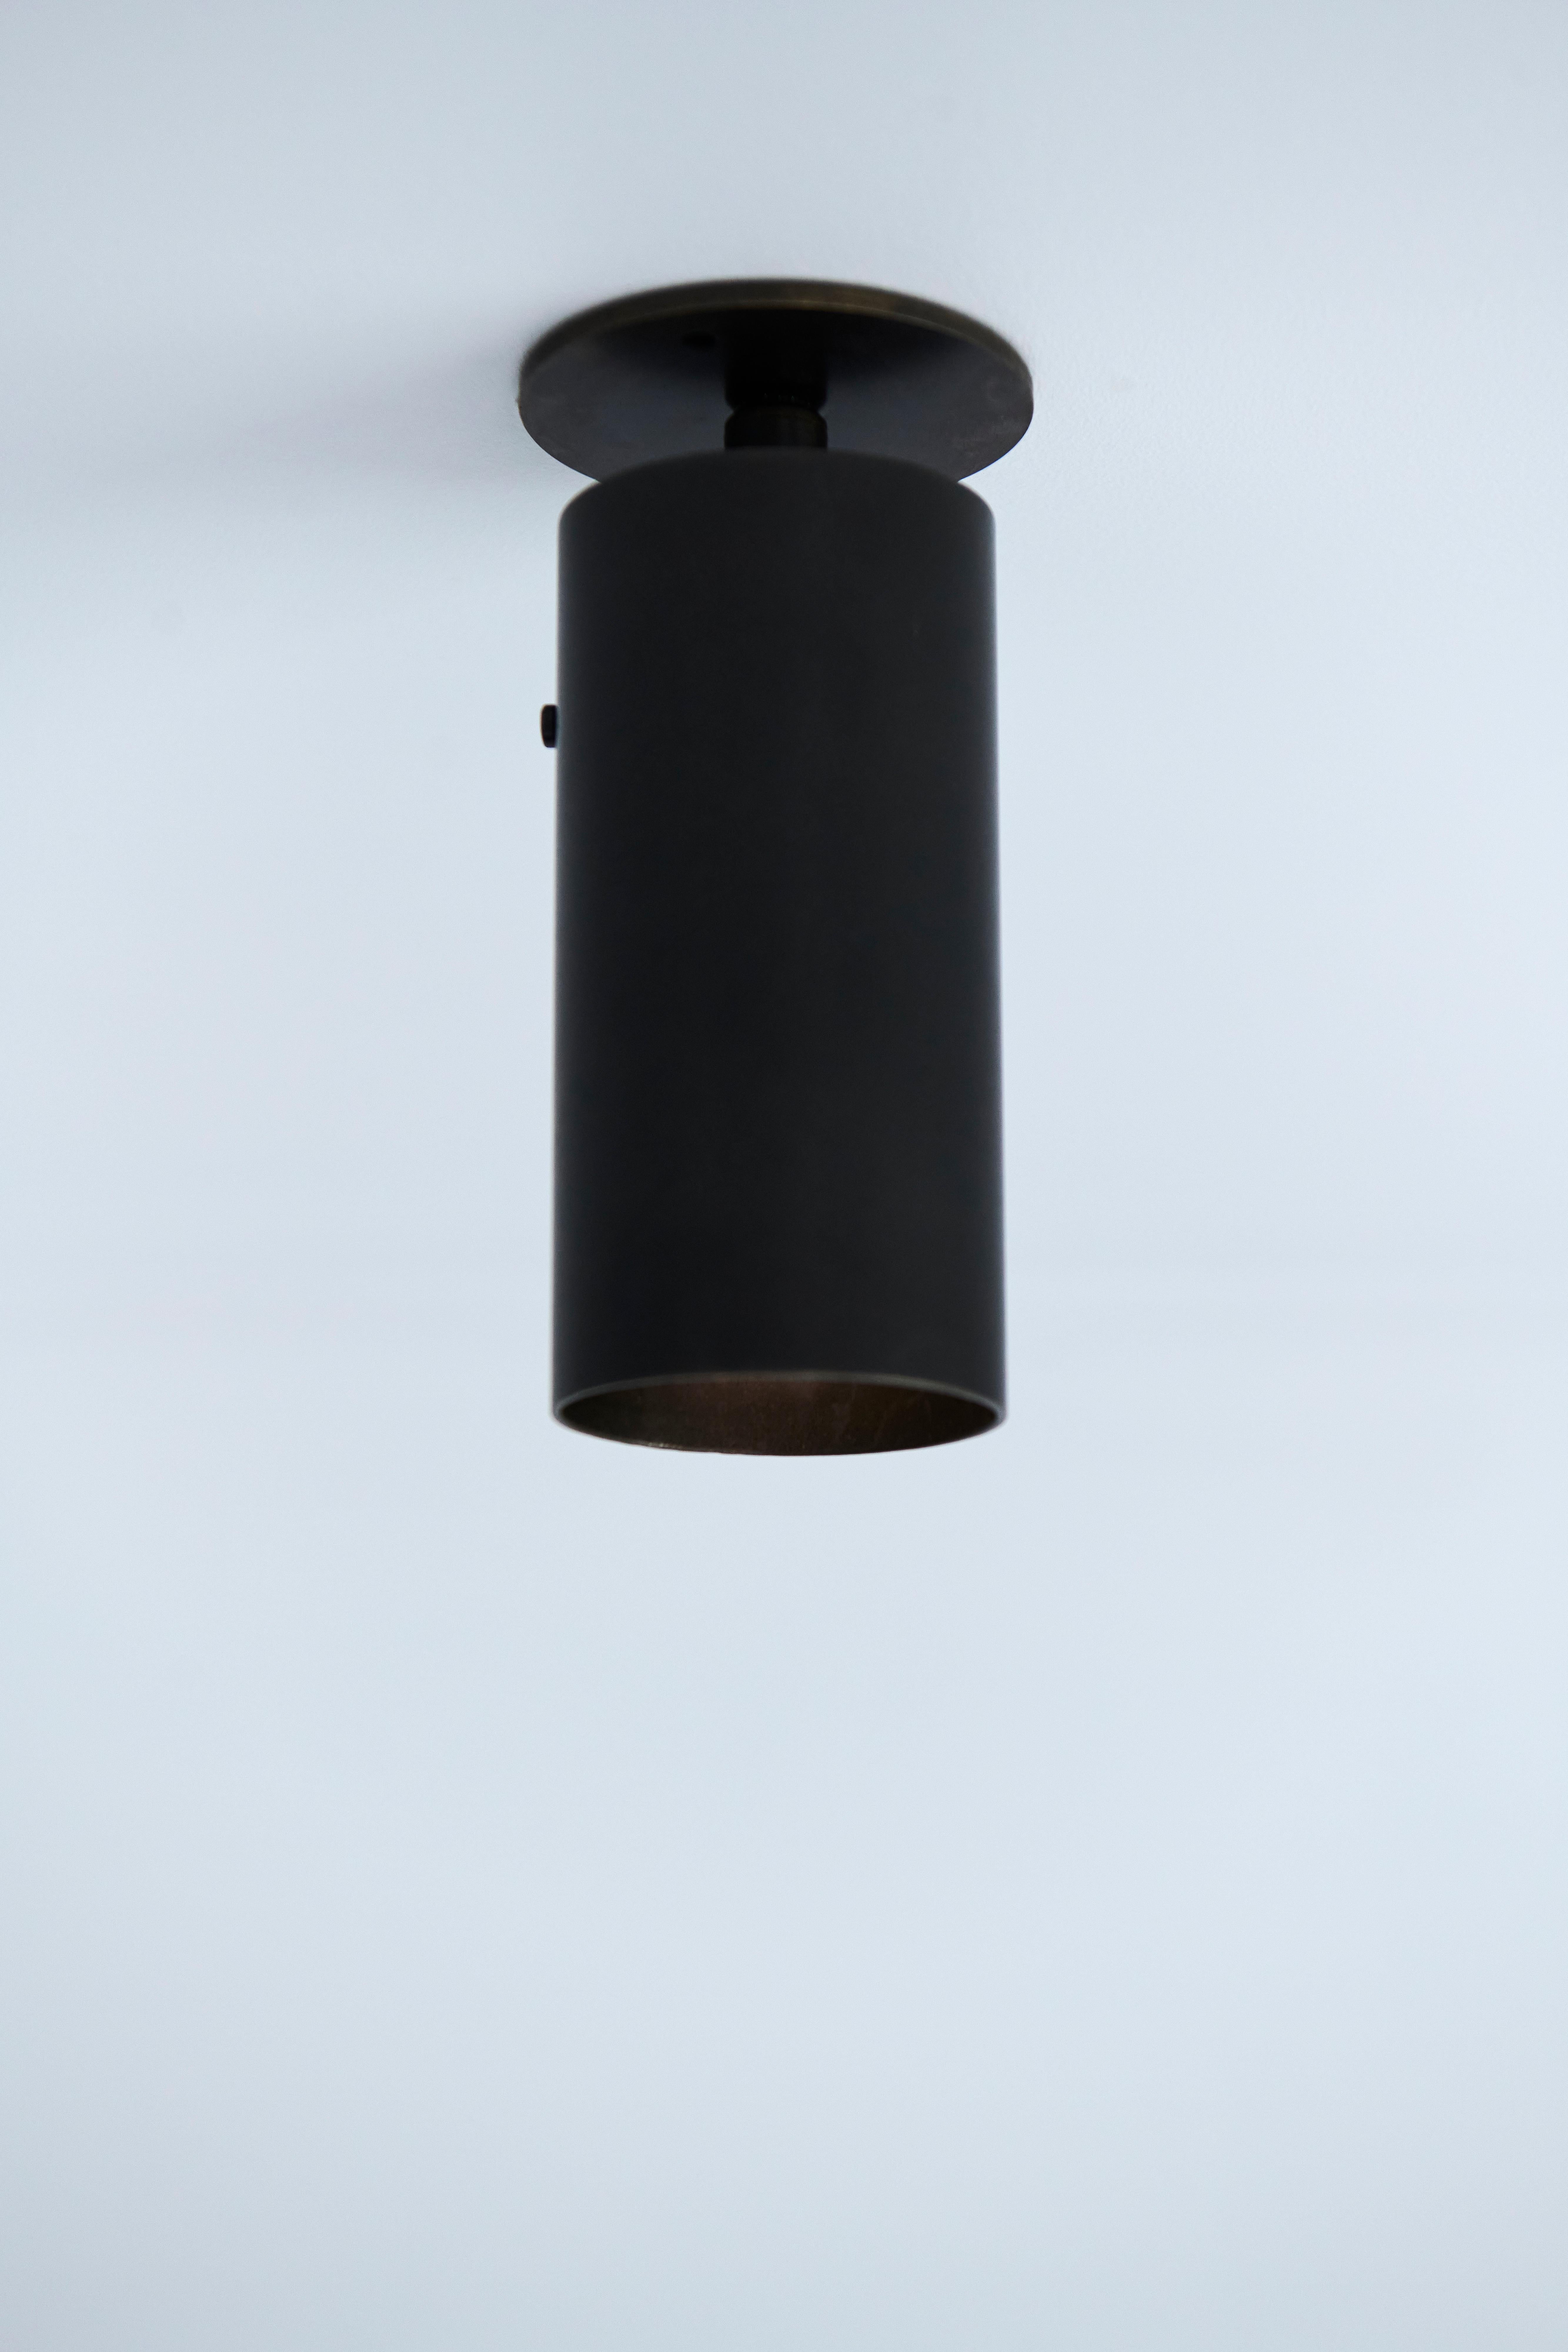 Australian Spruce St Spot Light, Noir Blackened Brass by DUNLIN For Sale